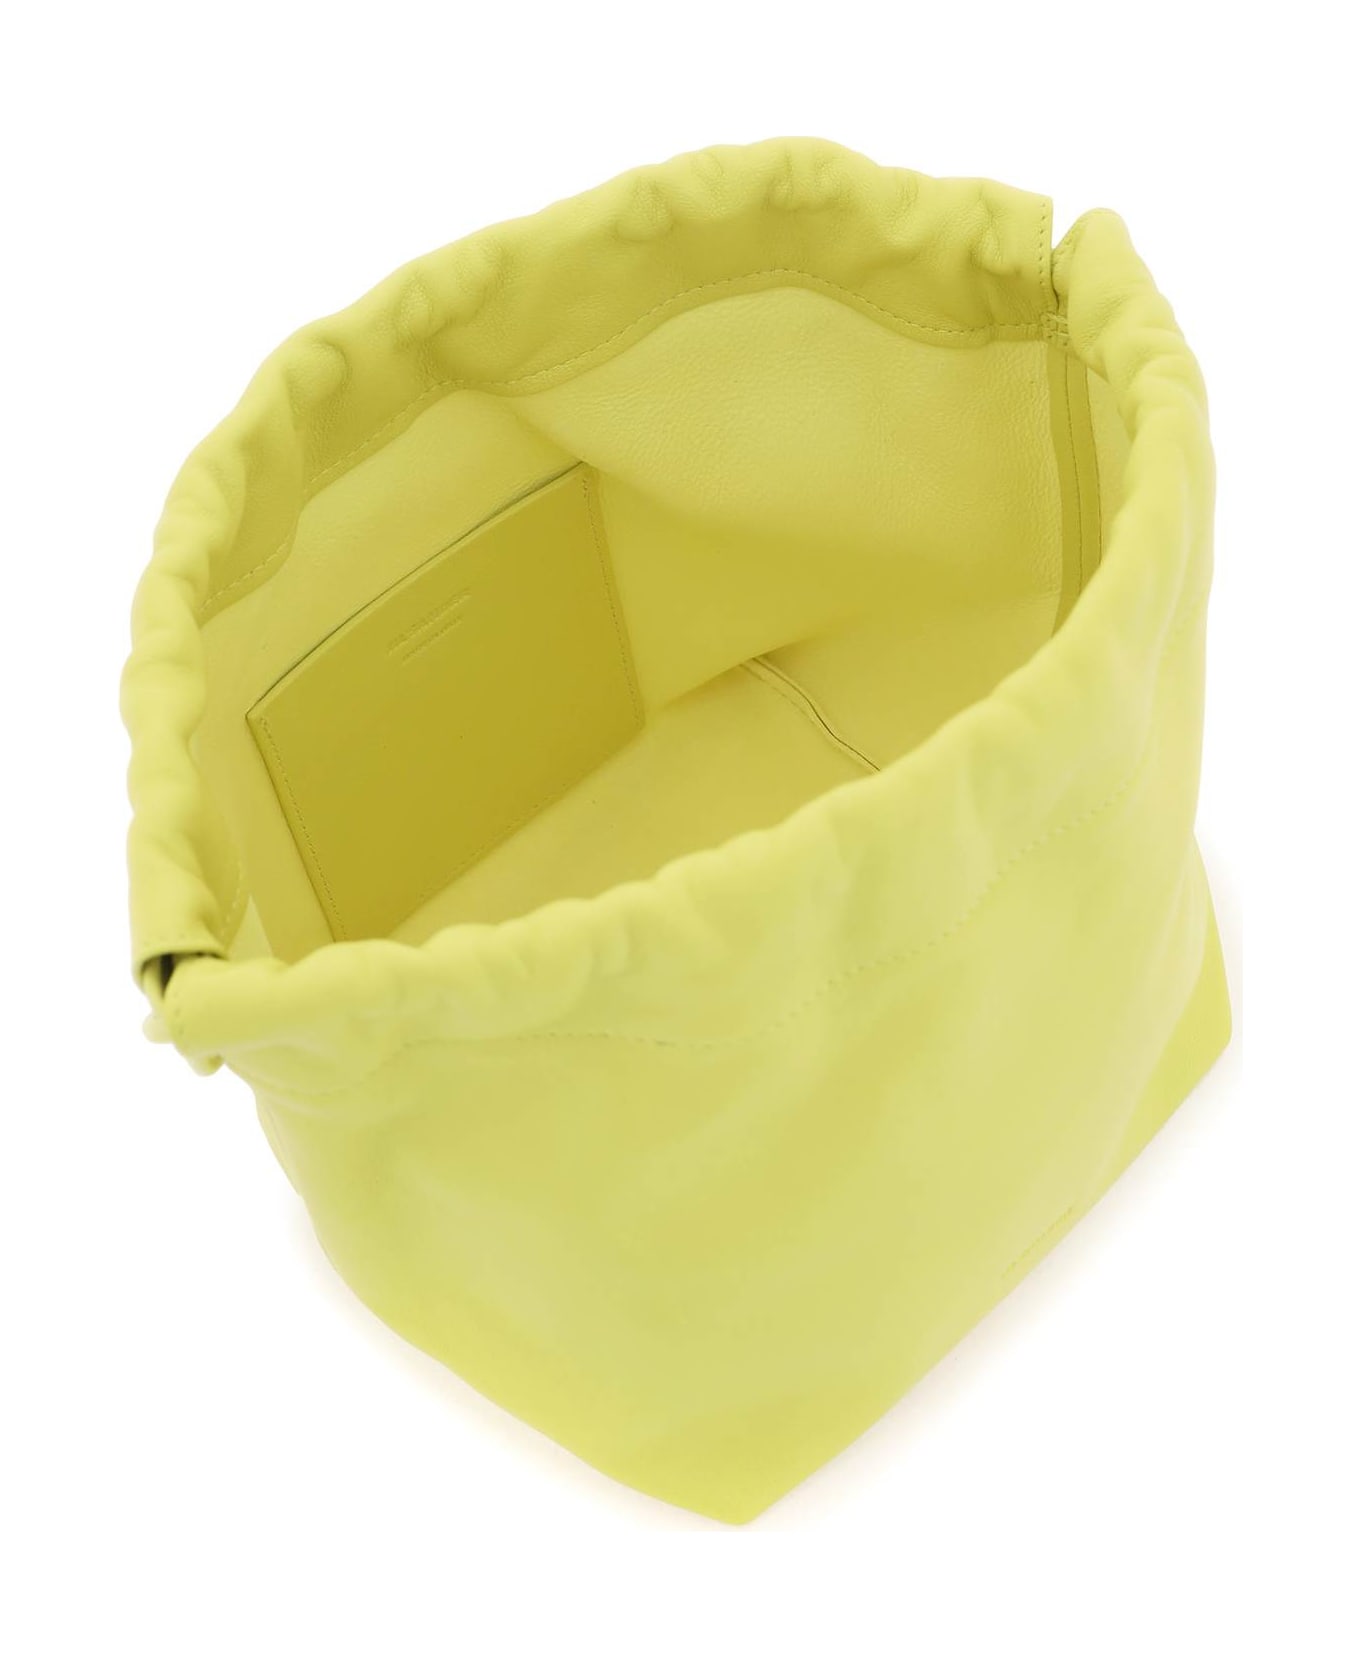 Jil Sander Yellow Leather Bag - Green ショルダーバッグ